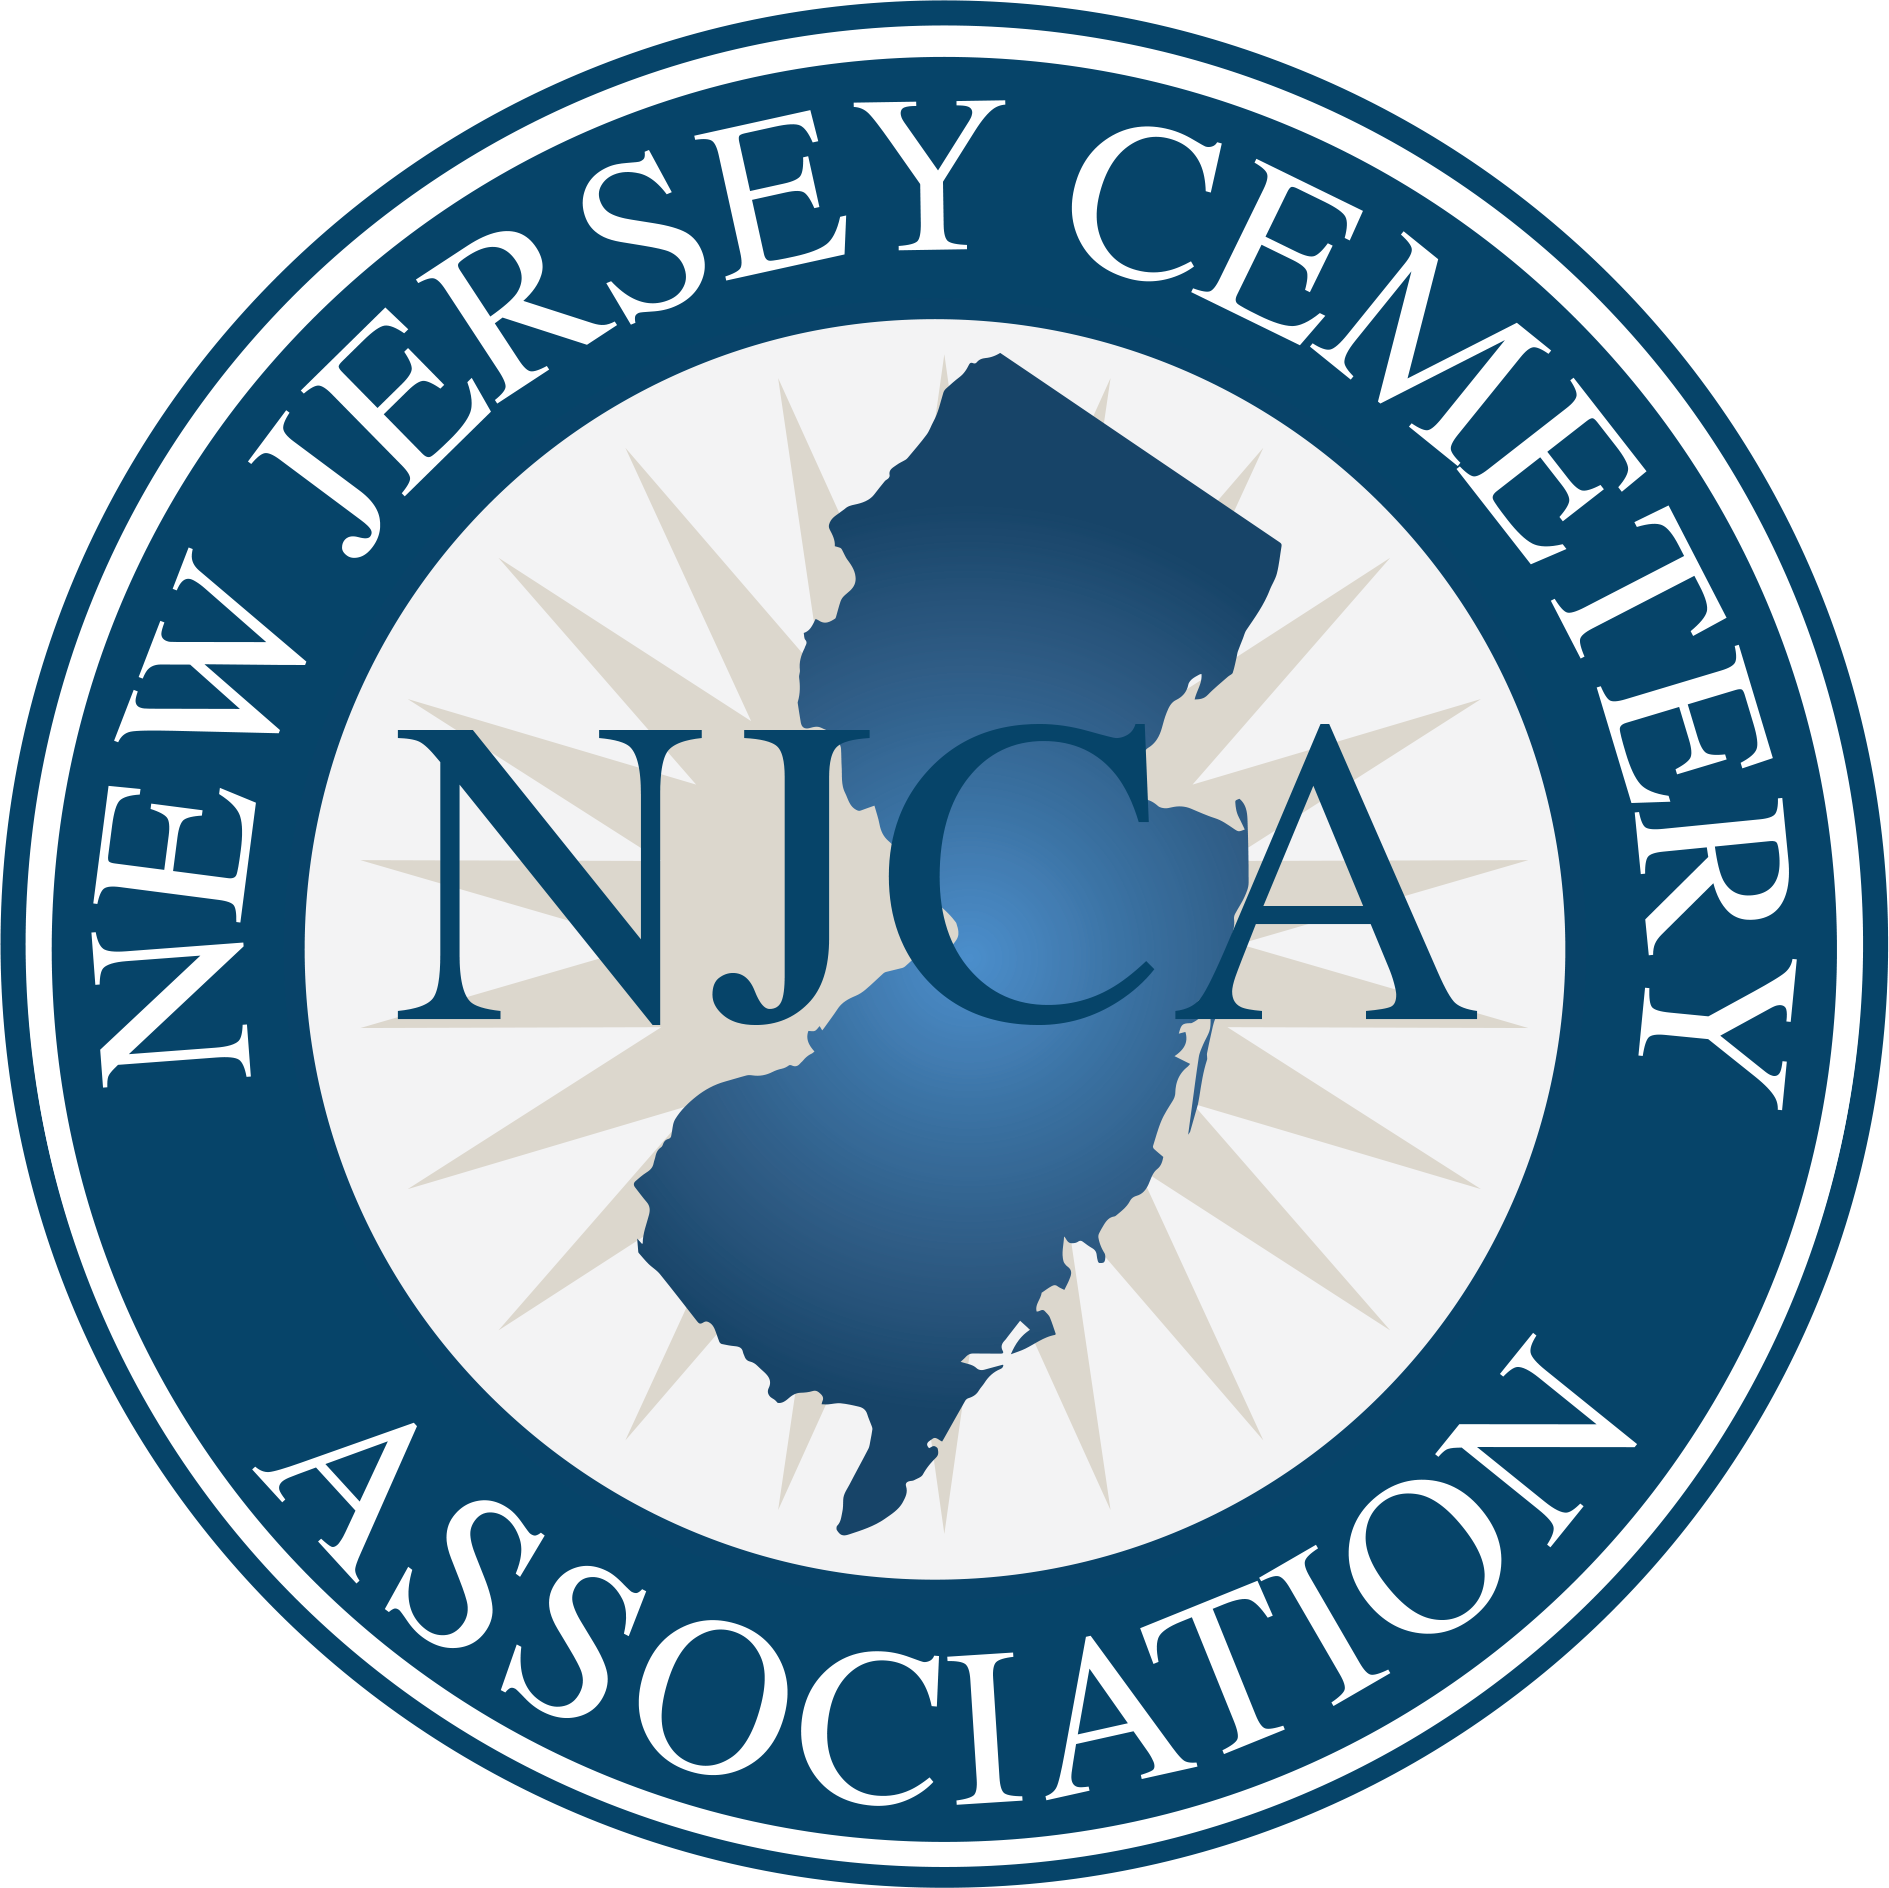 New Jersey Cemetery Association